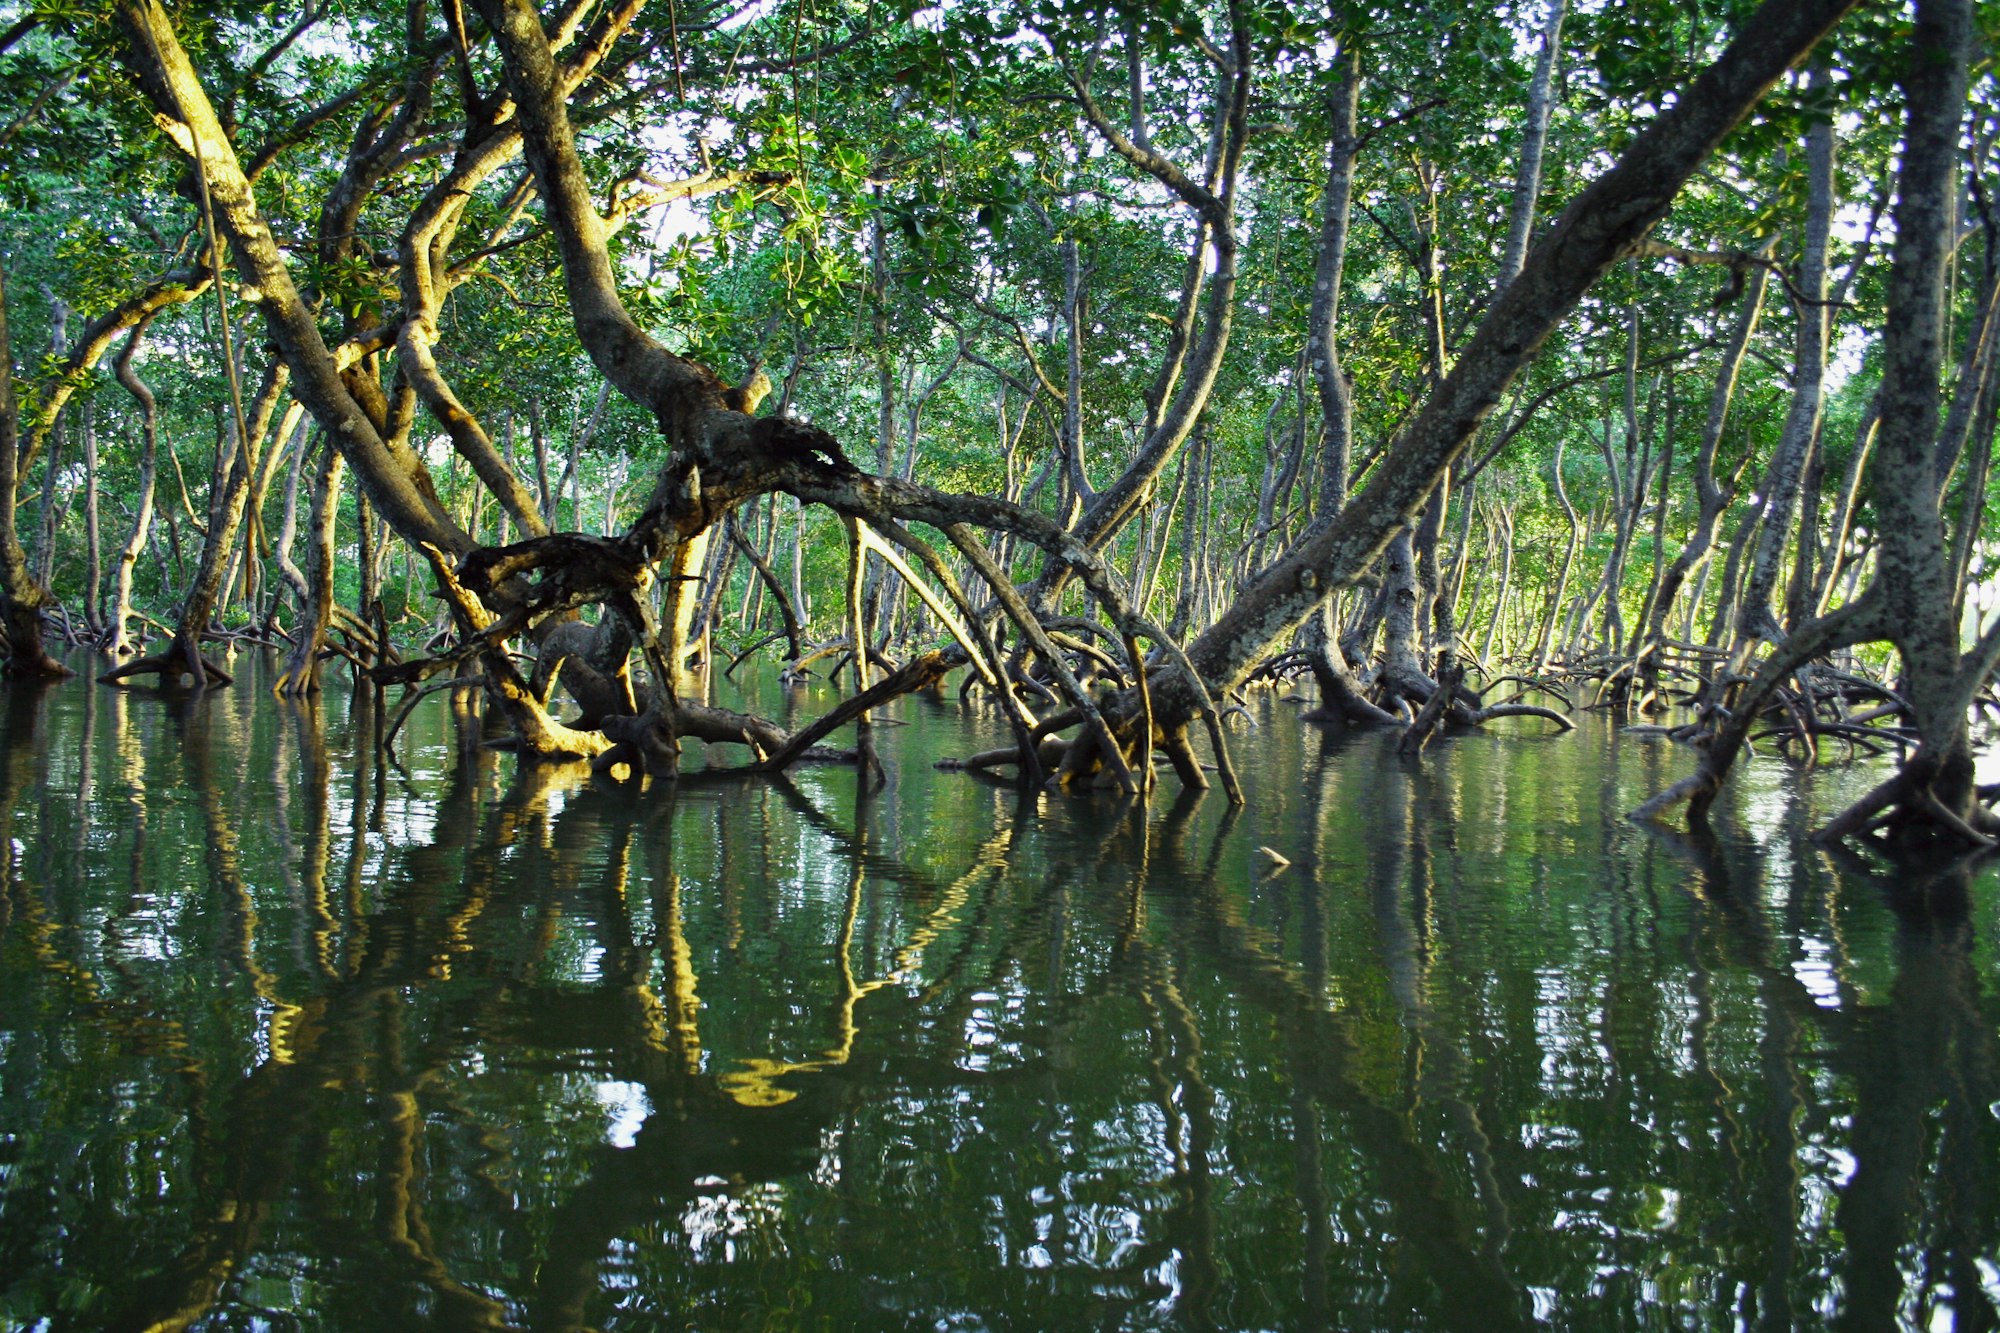 Mangrove forest located in the Mida Creek - Malindi